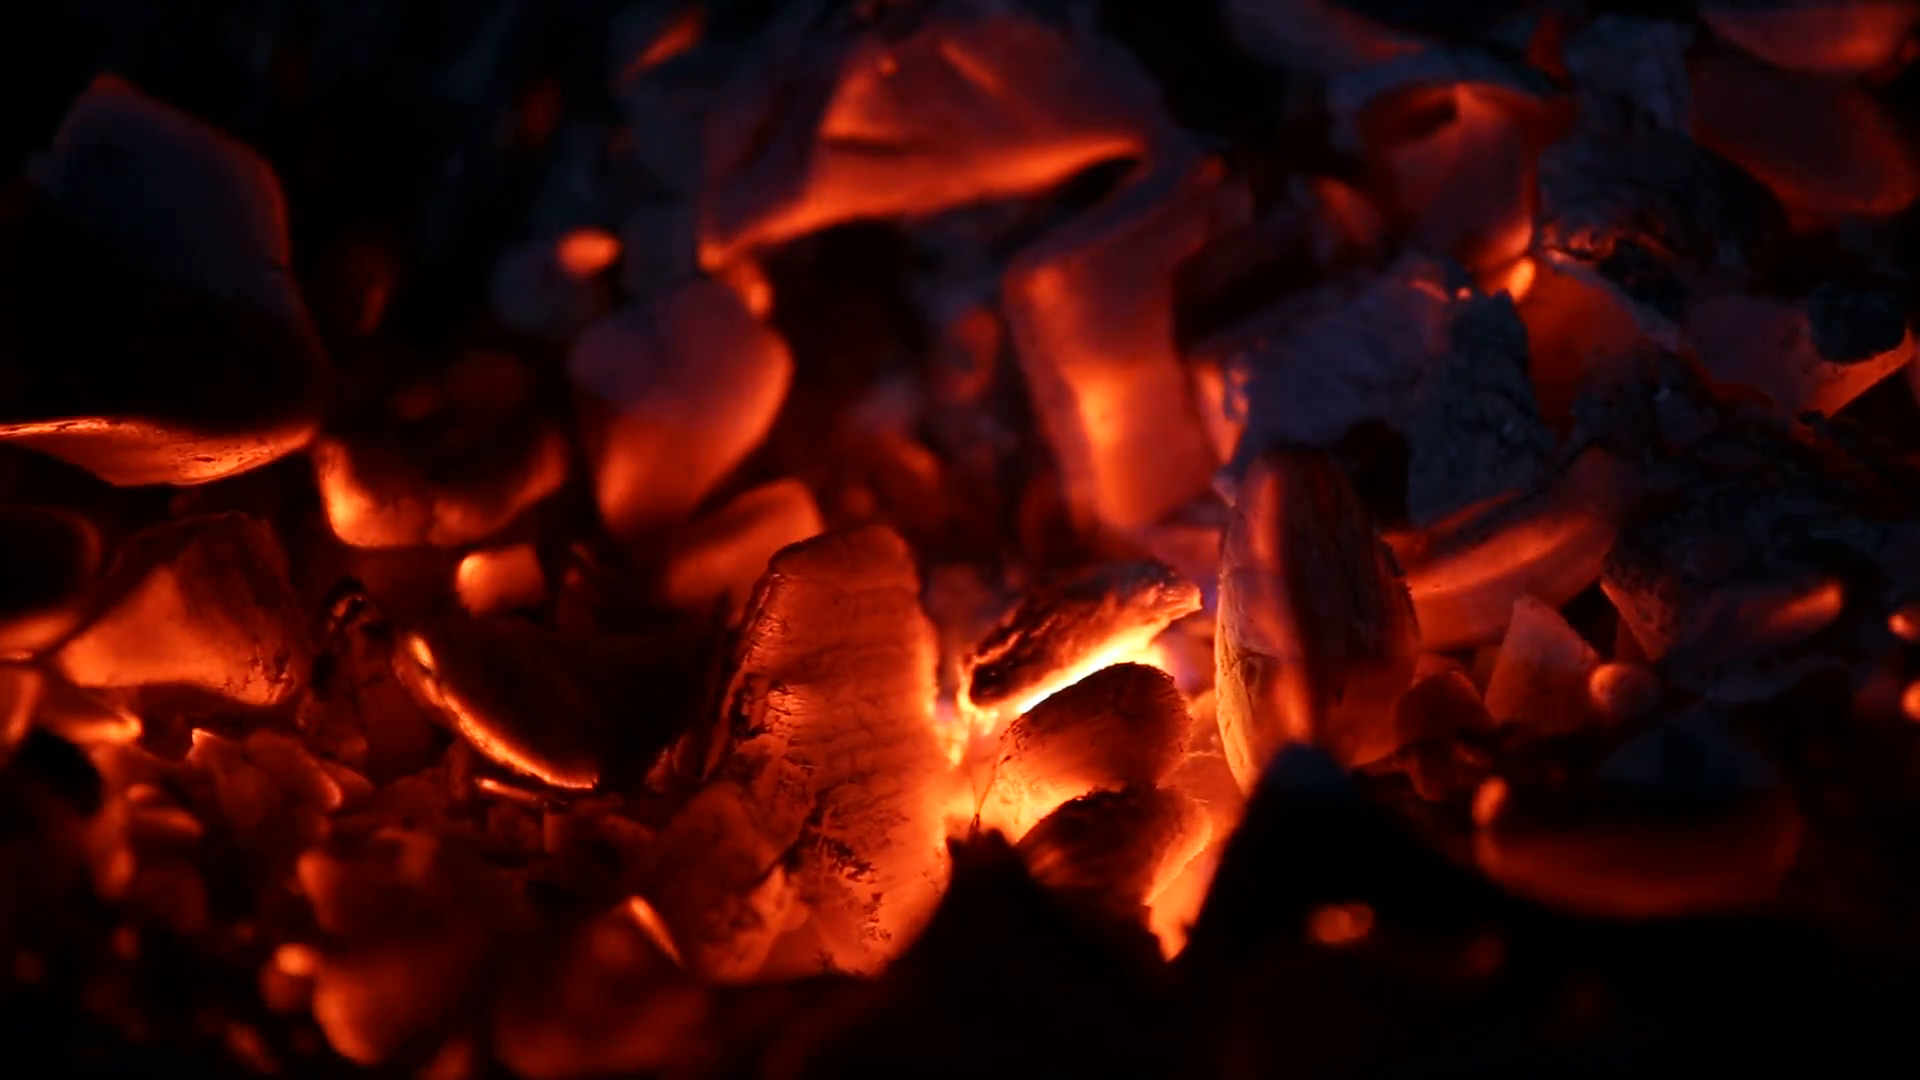 Burning Coal(sack)